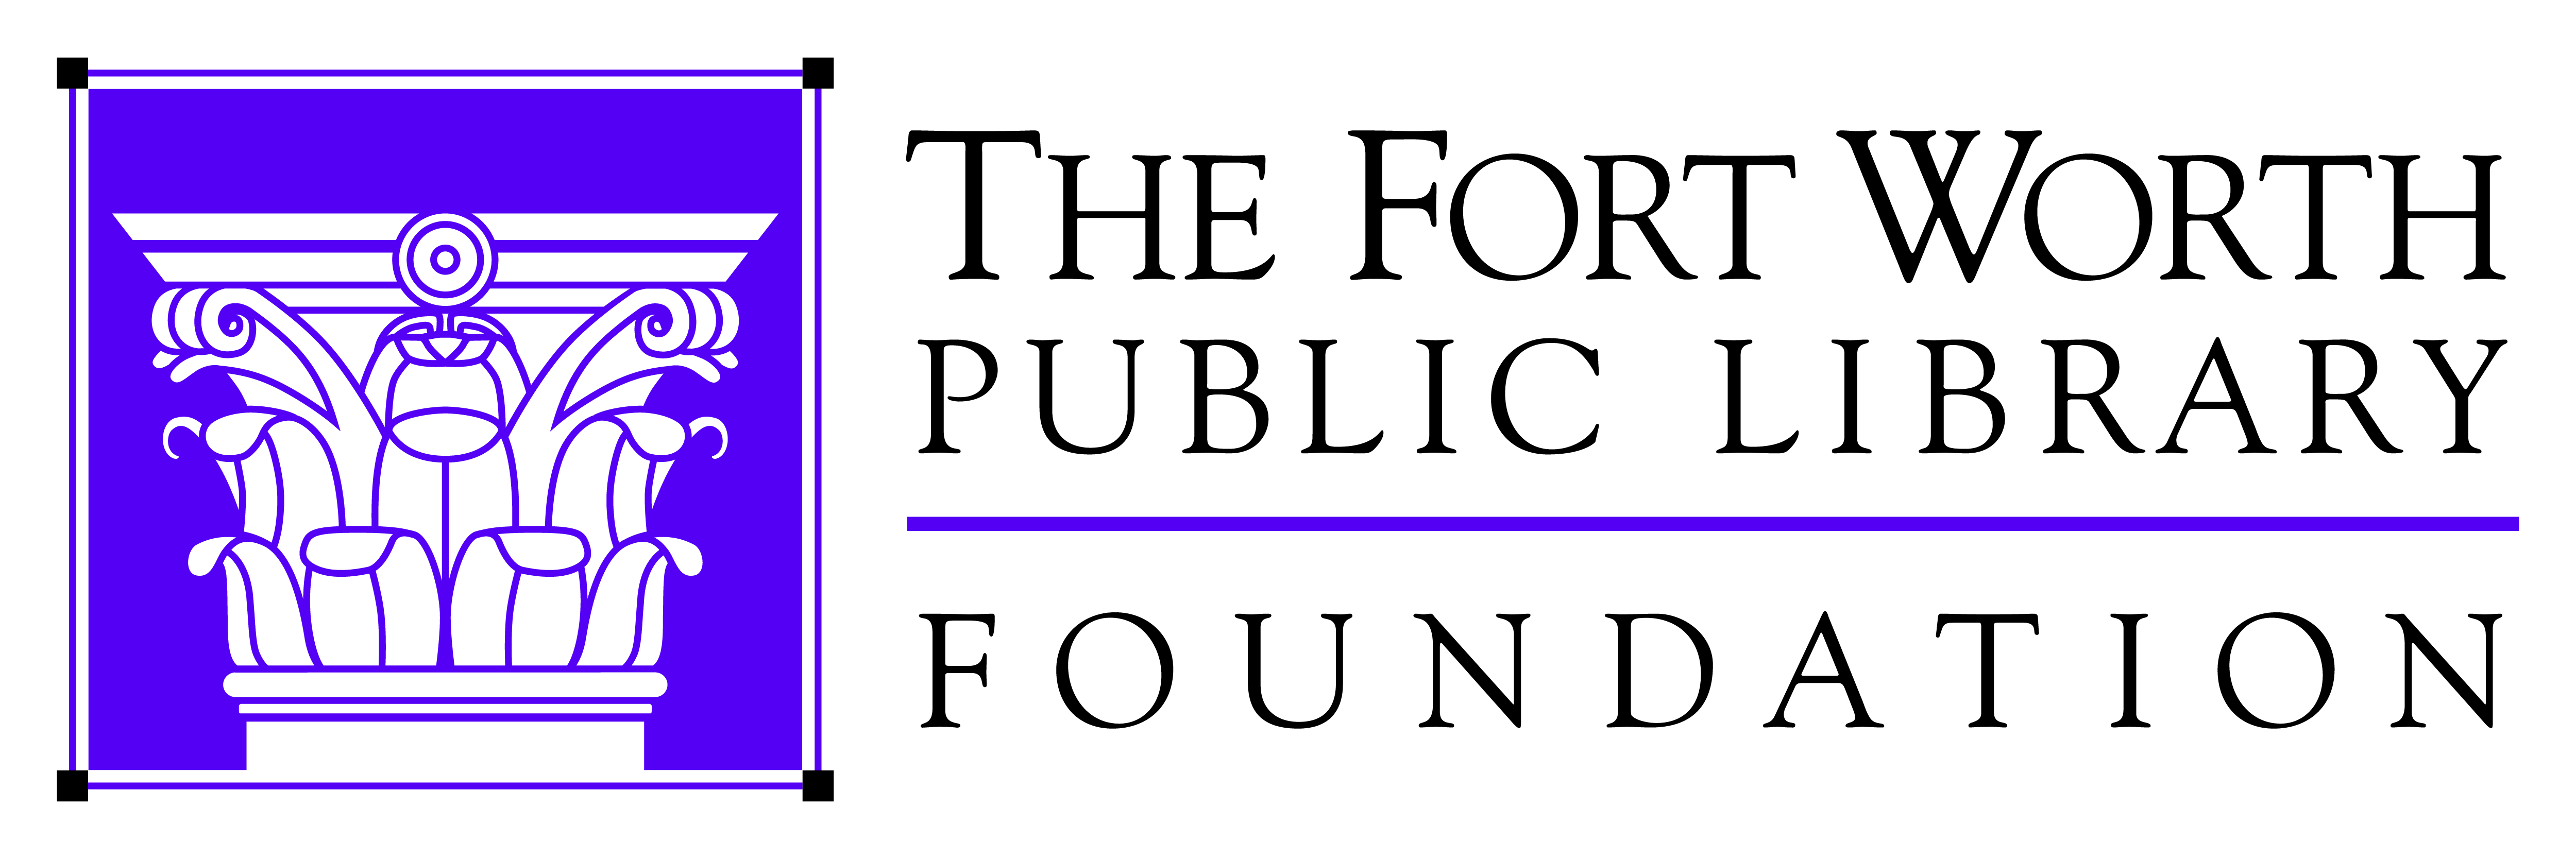 Fort Worth Public Library Foundation horizontal logo